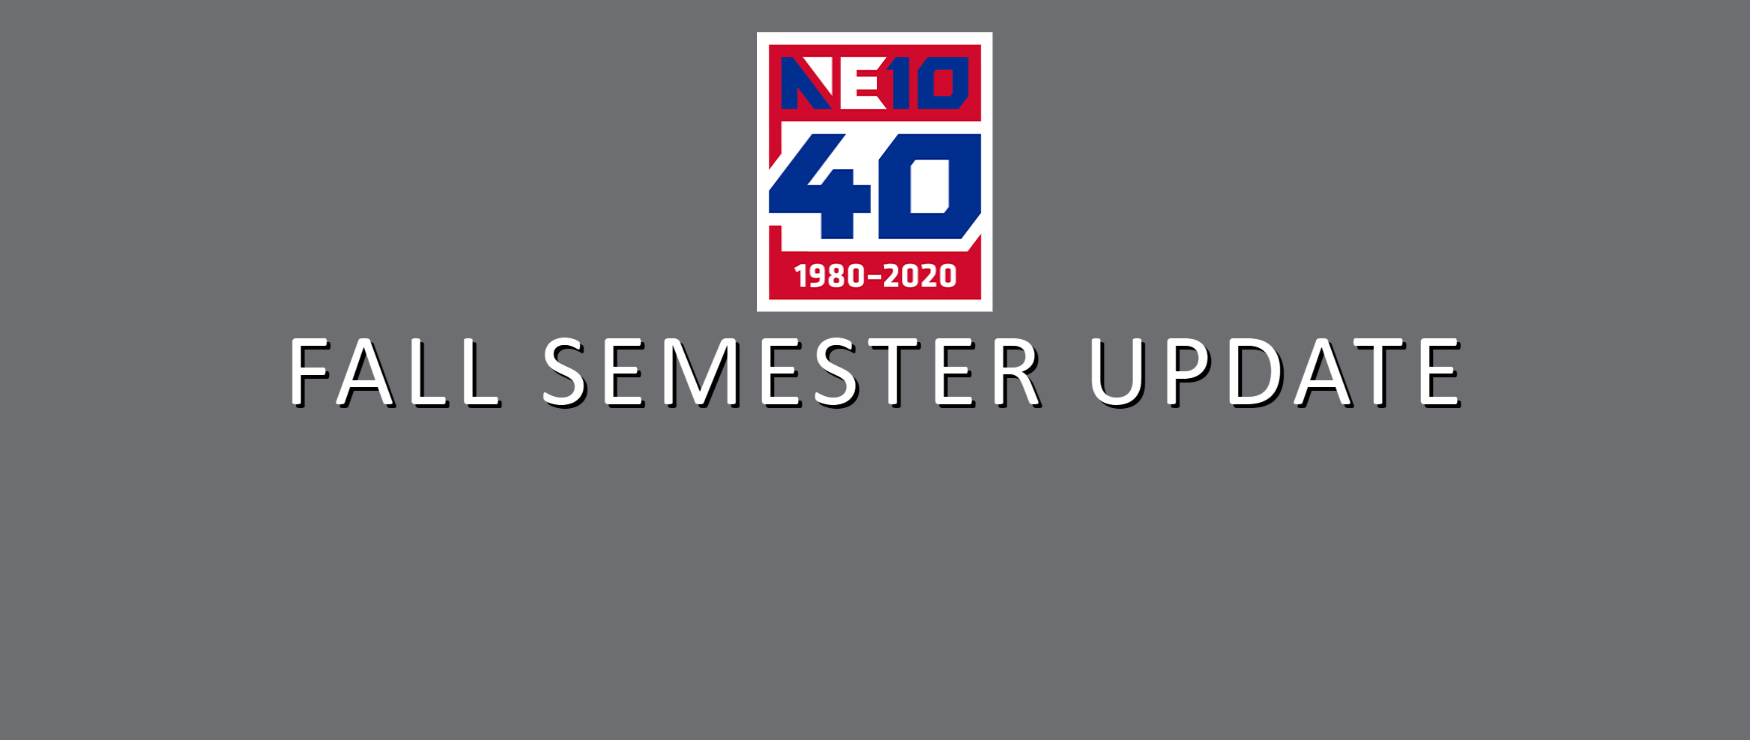 NE10 Fall Semester Update